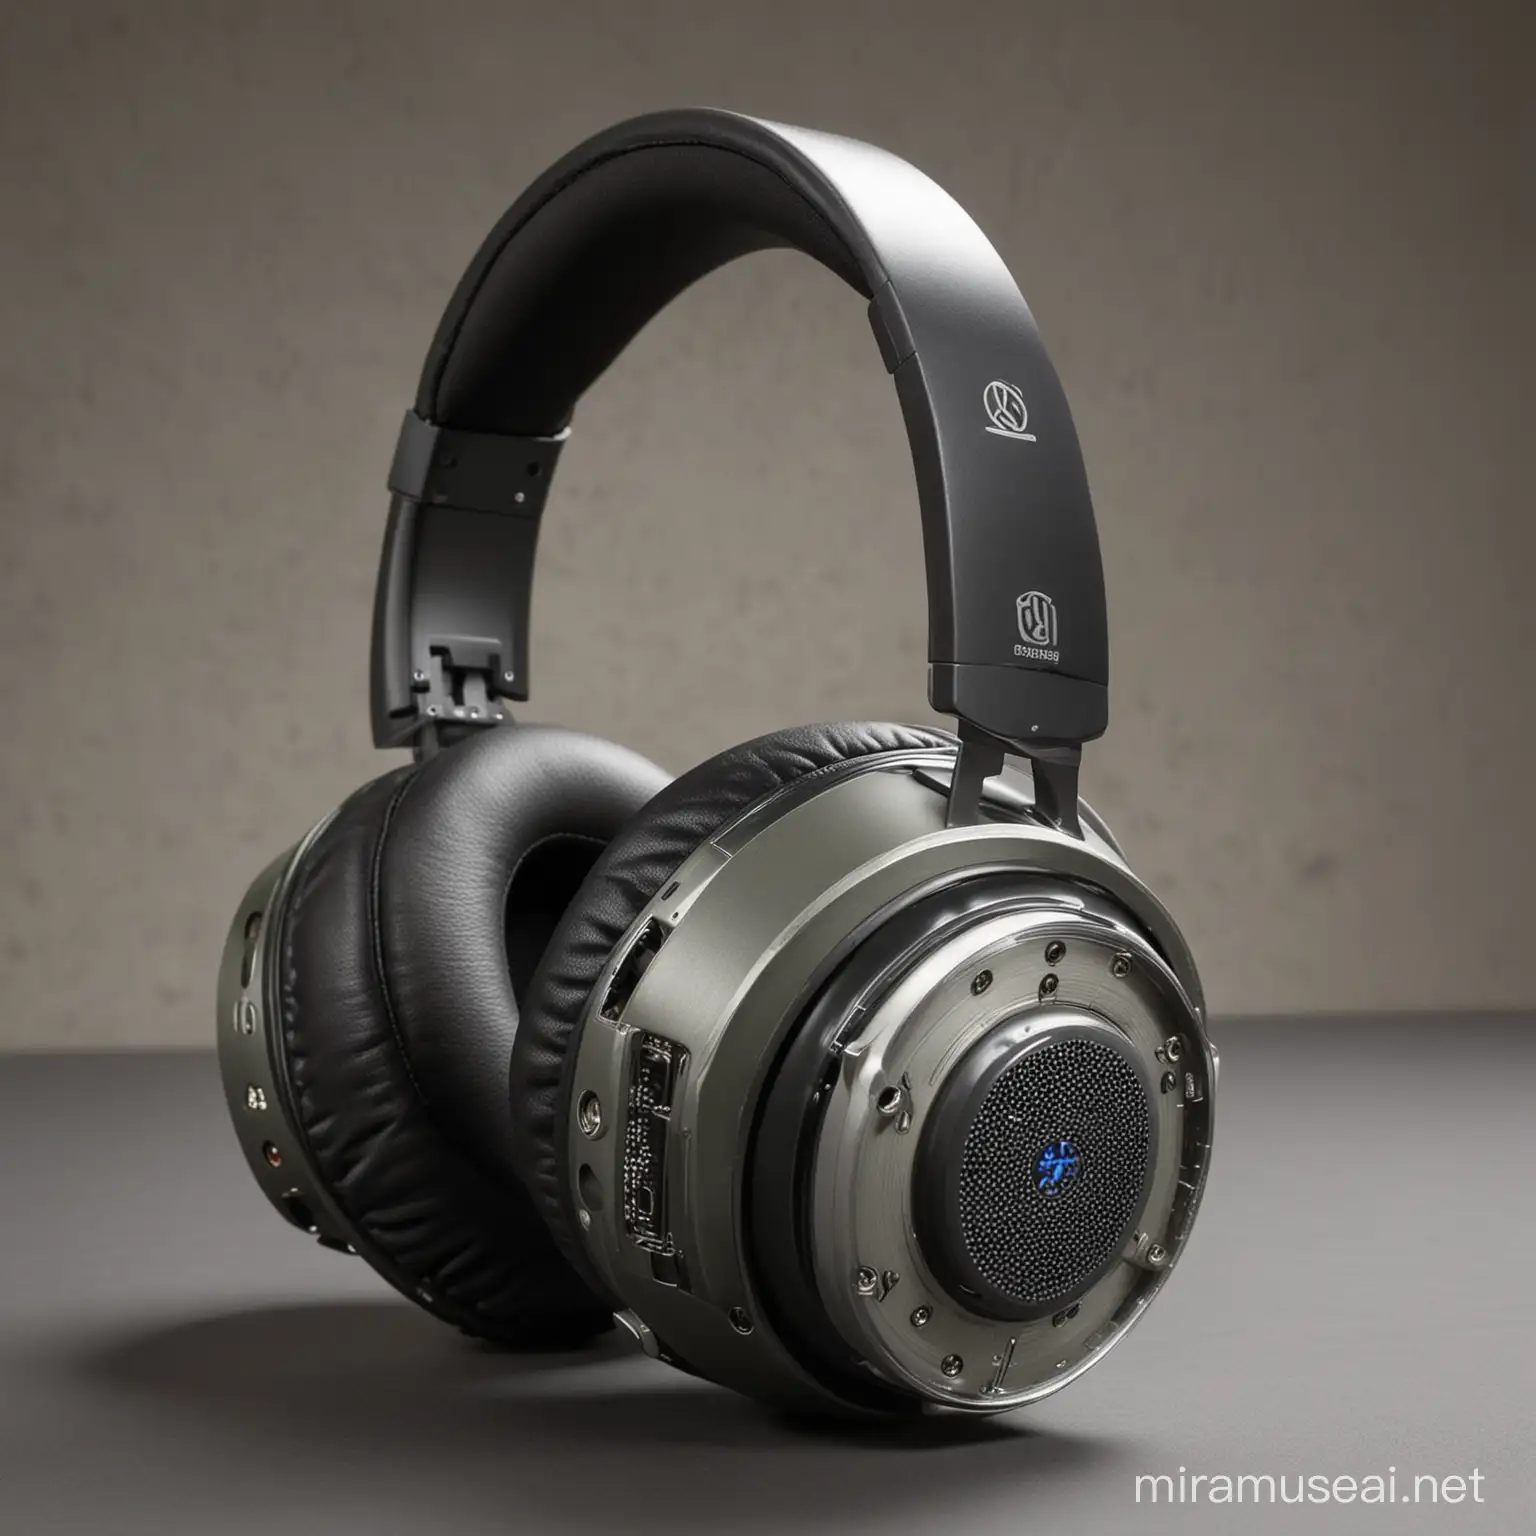 NuclearPowered Bluetooth Headphones for Endless Listening Pleasure